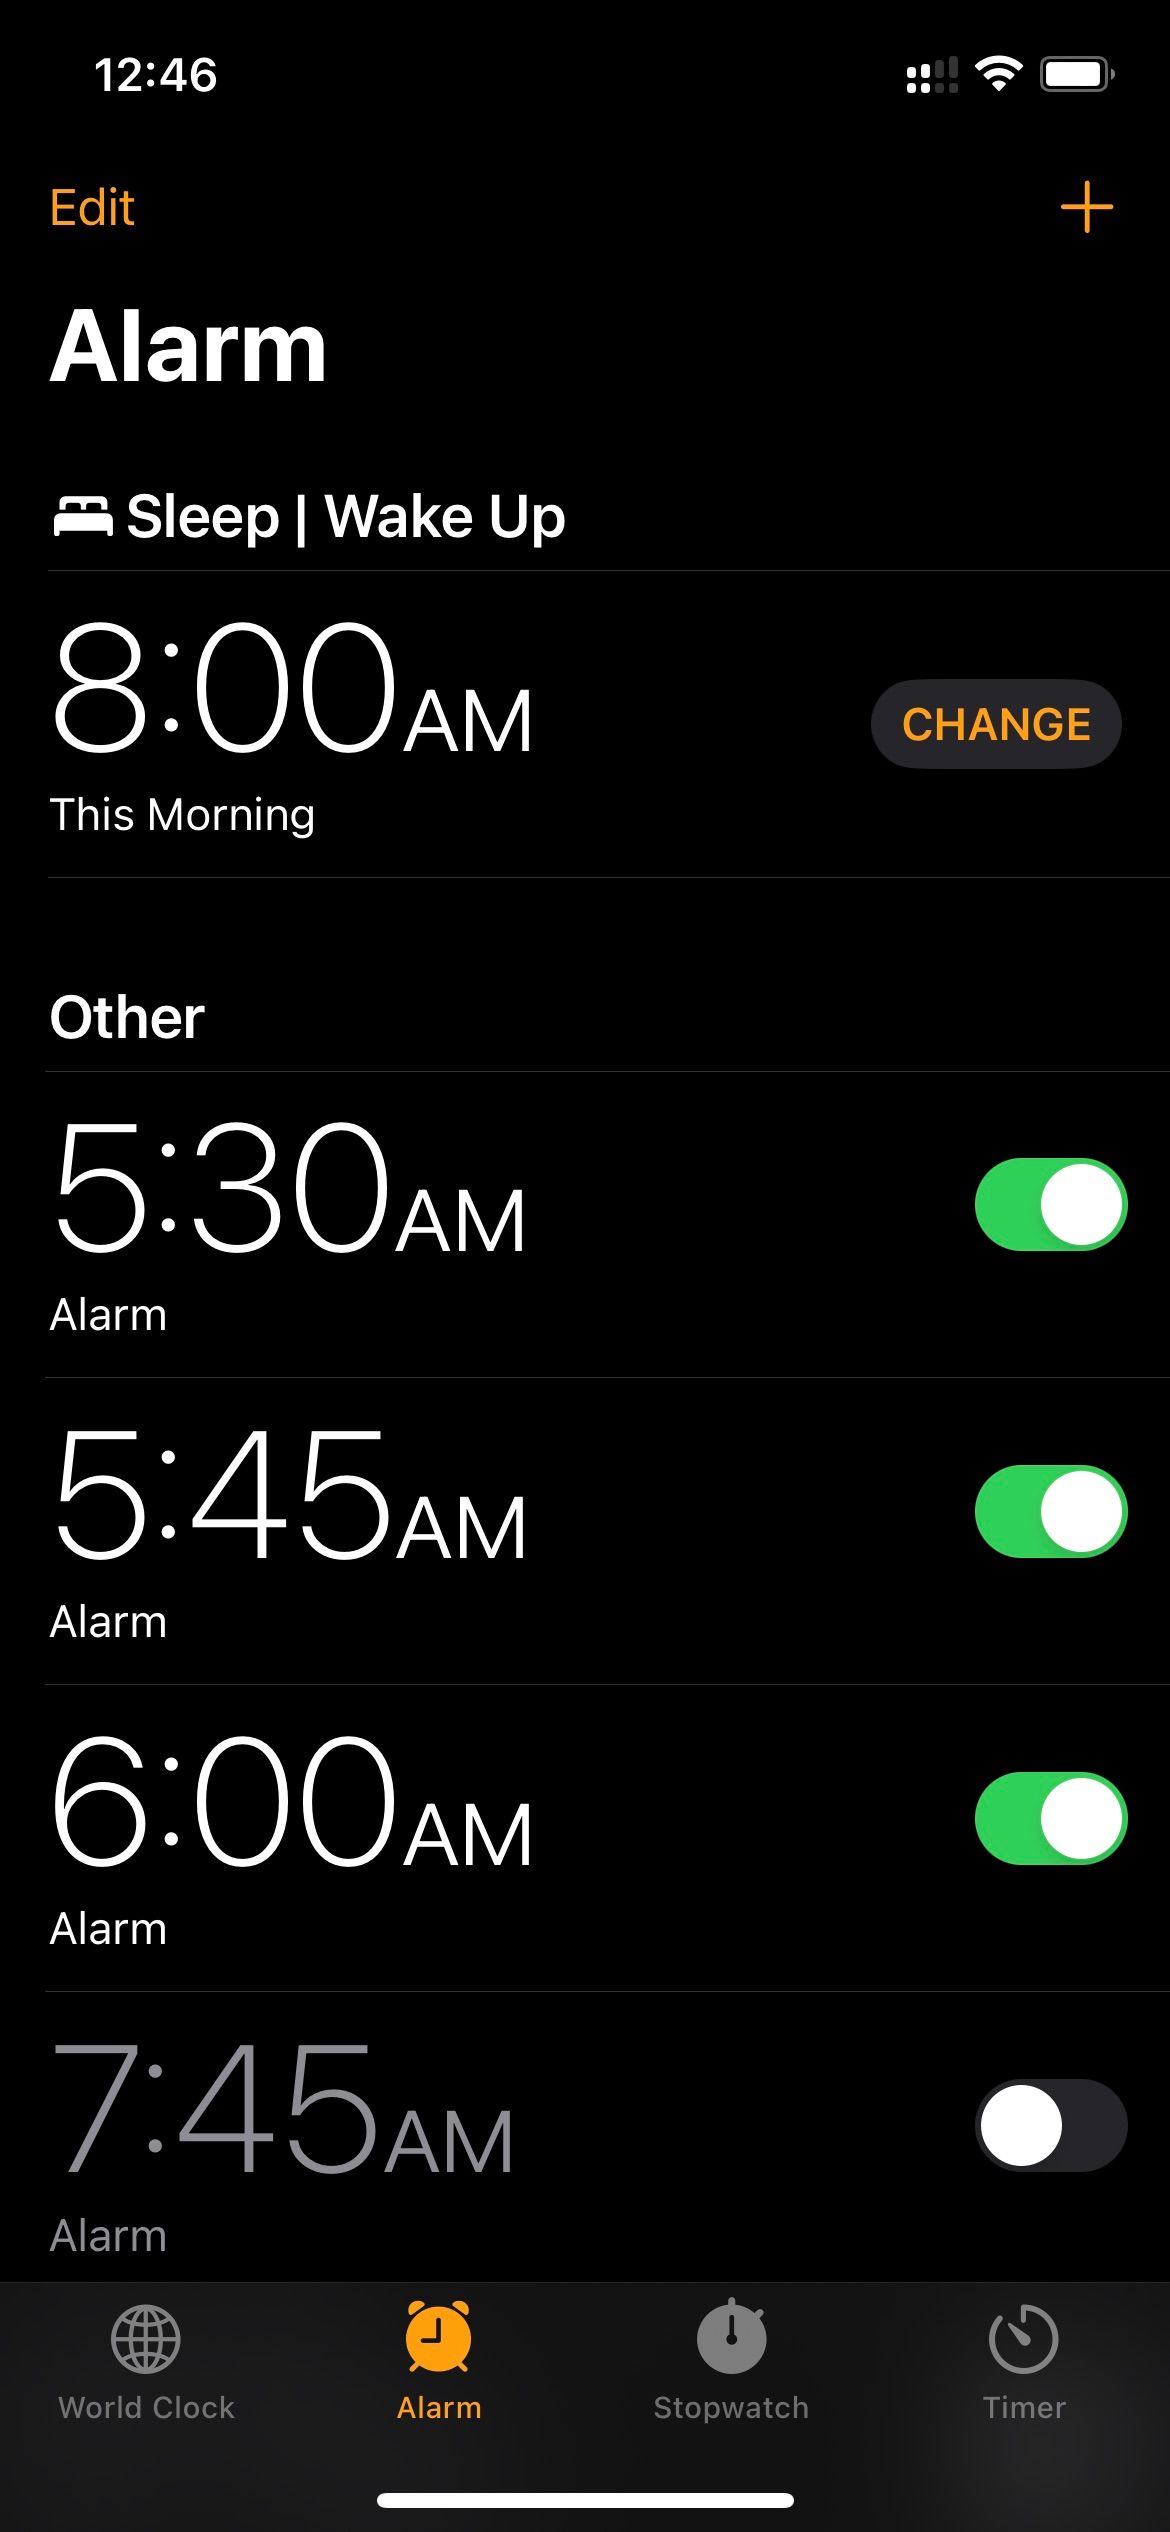 Multiple alarms set 15 minutes apart in Clock app 